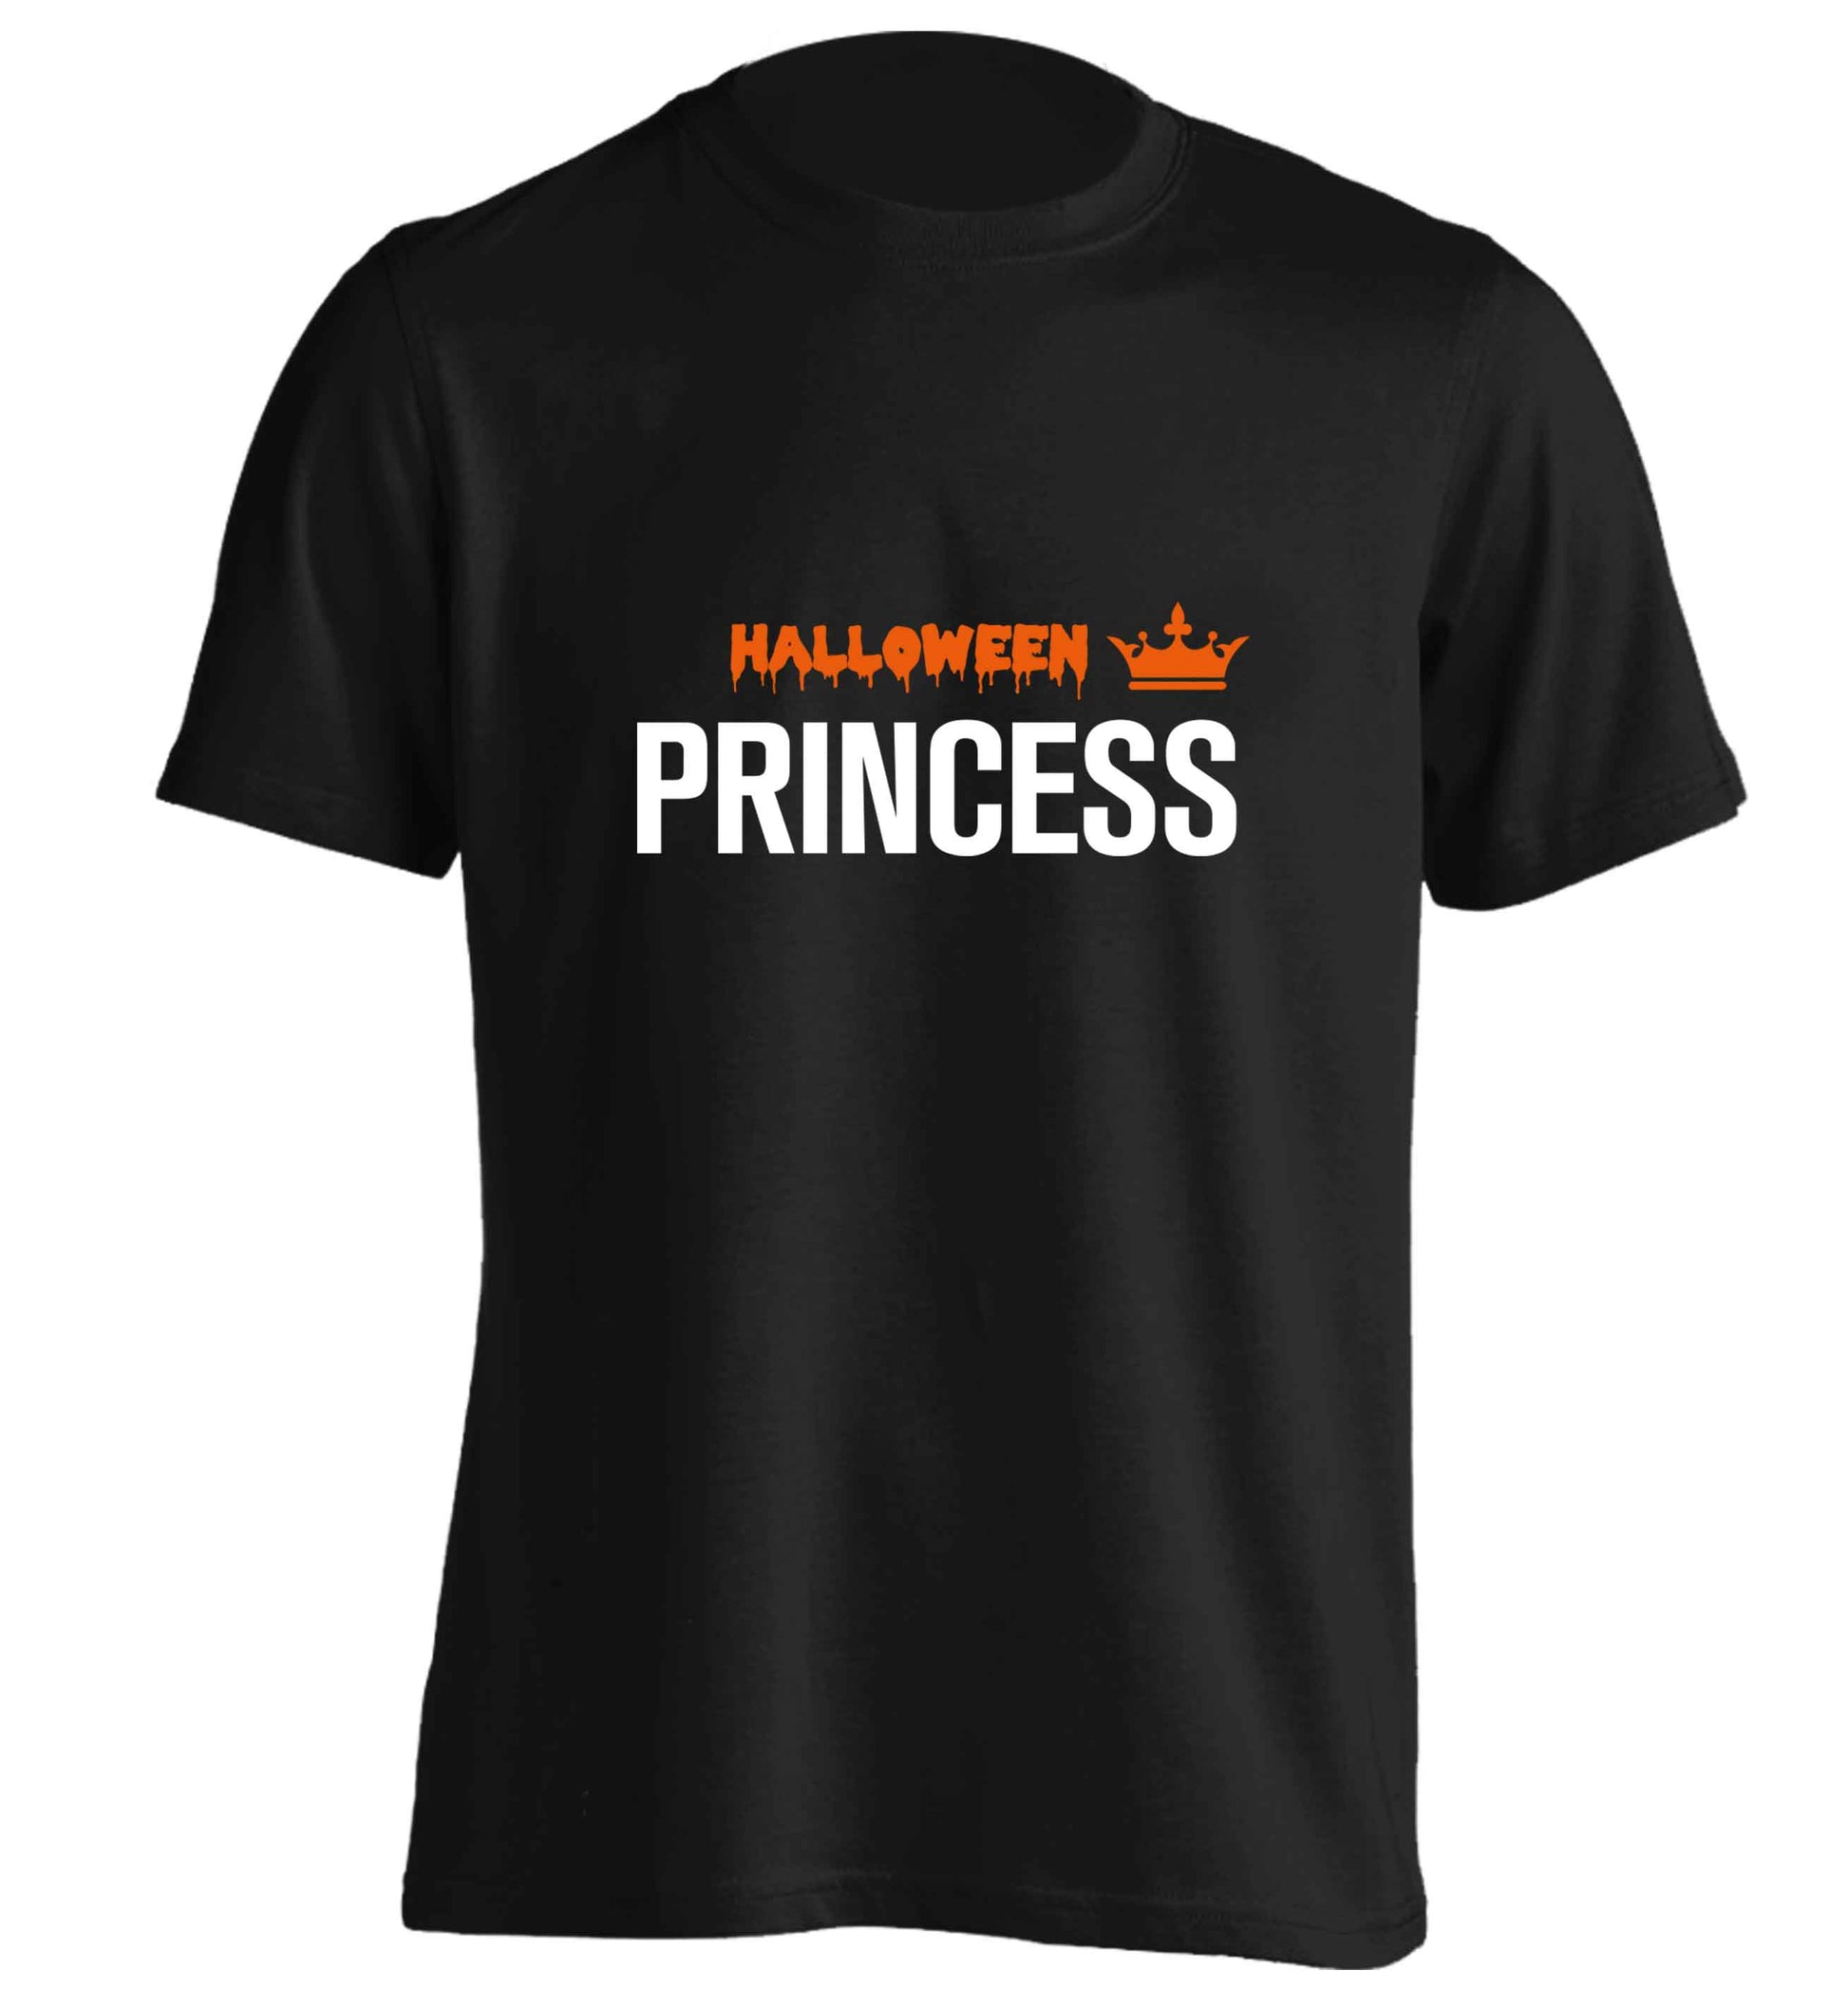 Halloween princess adults unisex black Tshirt 2XL